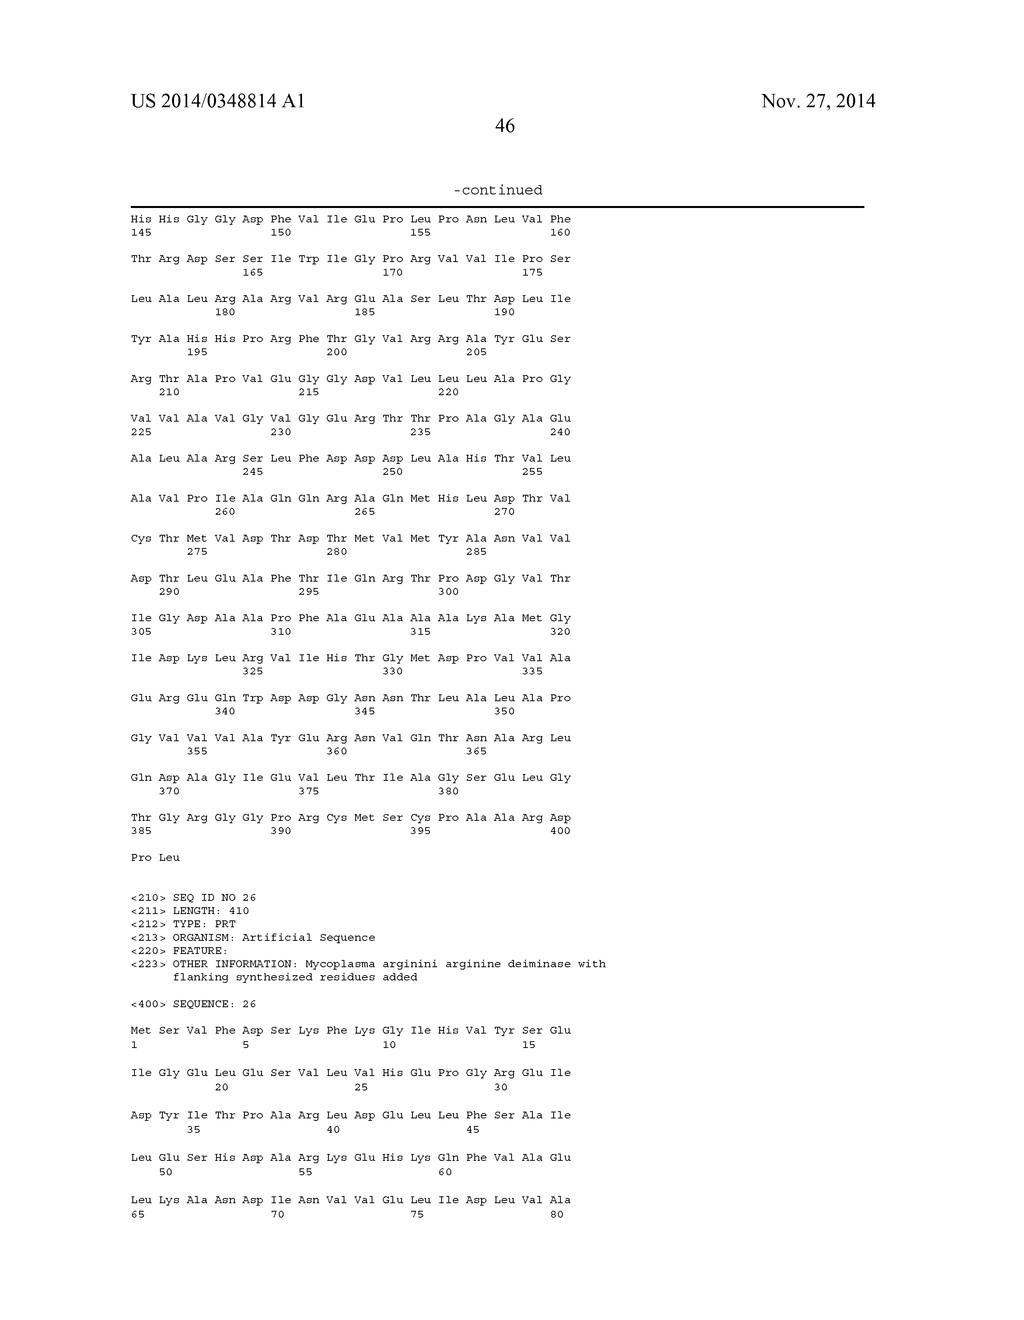 ARGINNE DEIMINASE WITH REDUCED CROSS-REACTIVITY TOWARD ADI - PEG 20     ANTIBODIES FOR CANCER TREATMENT - diagram, schematic, and image 47